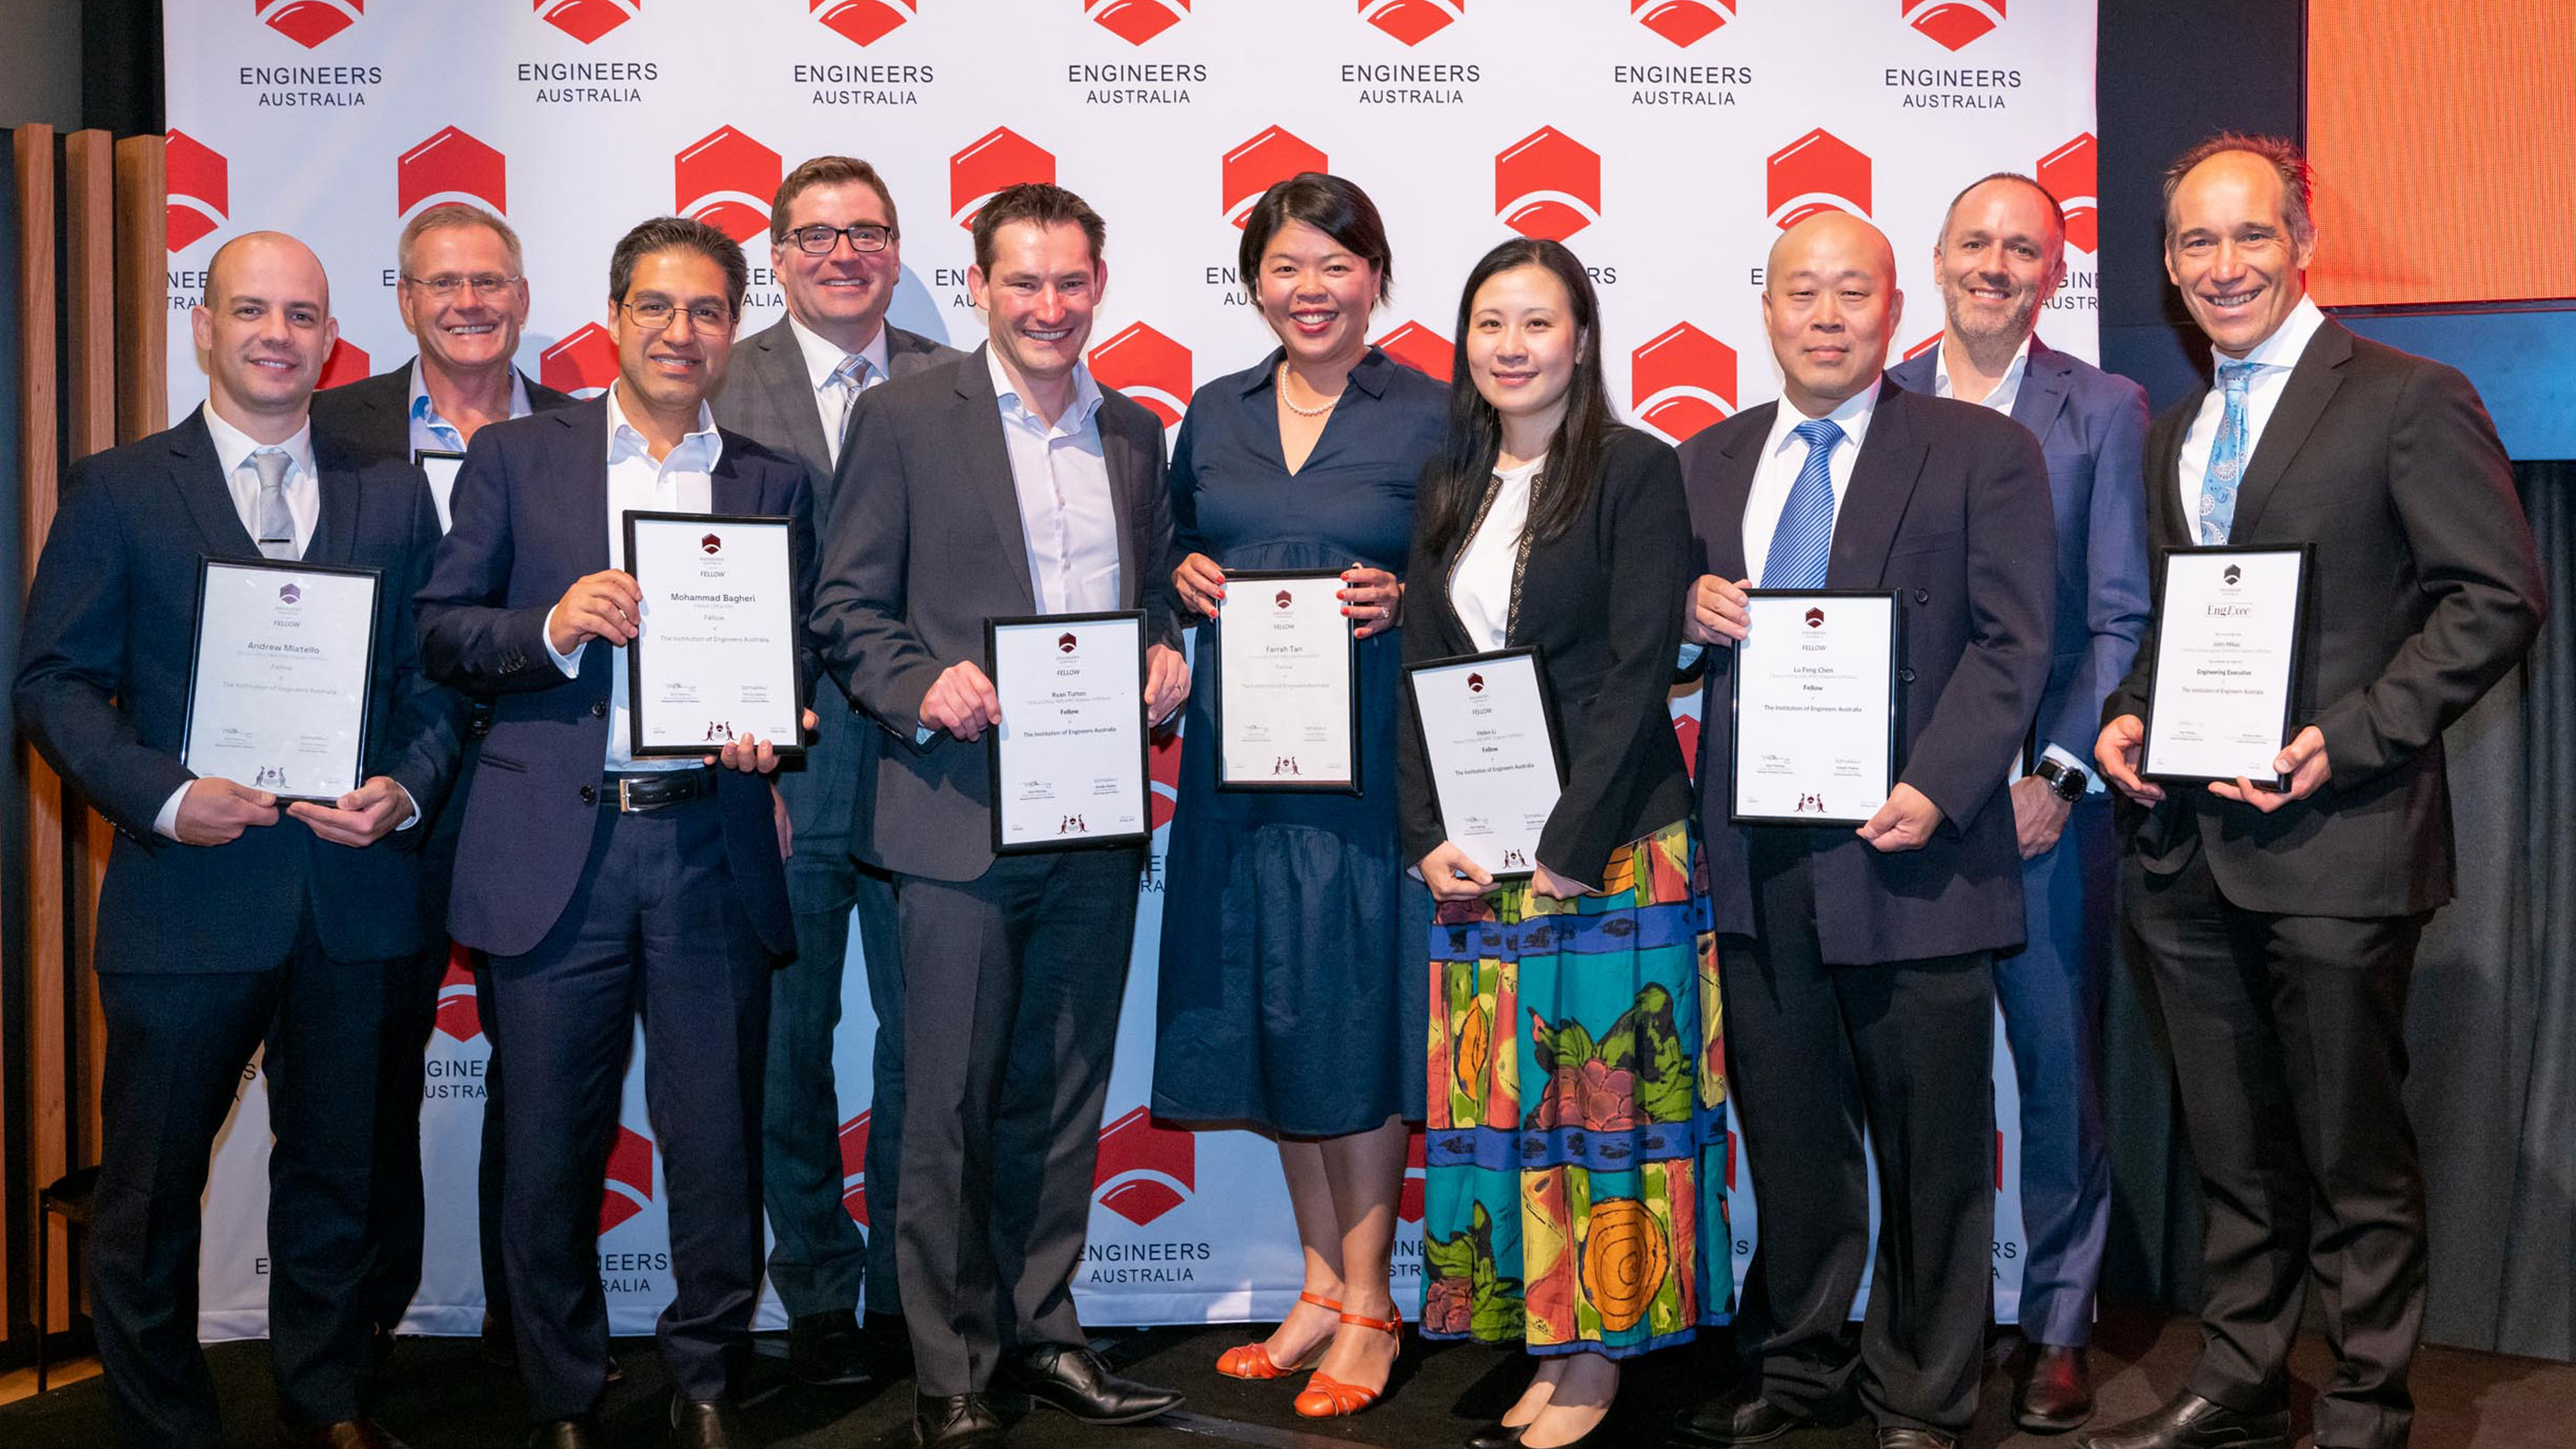 ExxonMobil Australia team members achieve leadership status through partnership with Engineers Australia